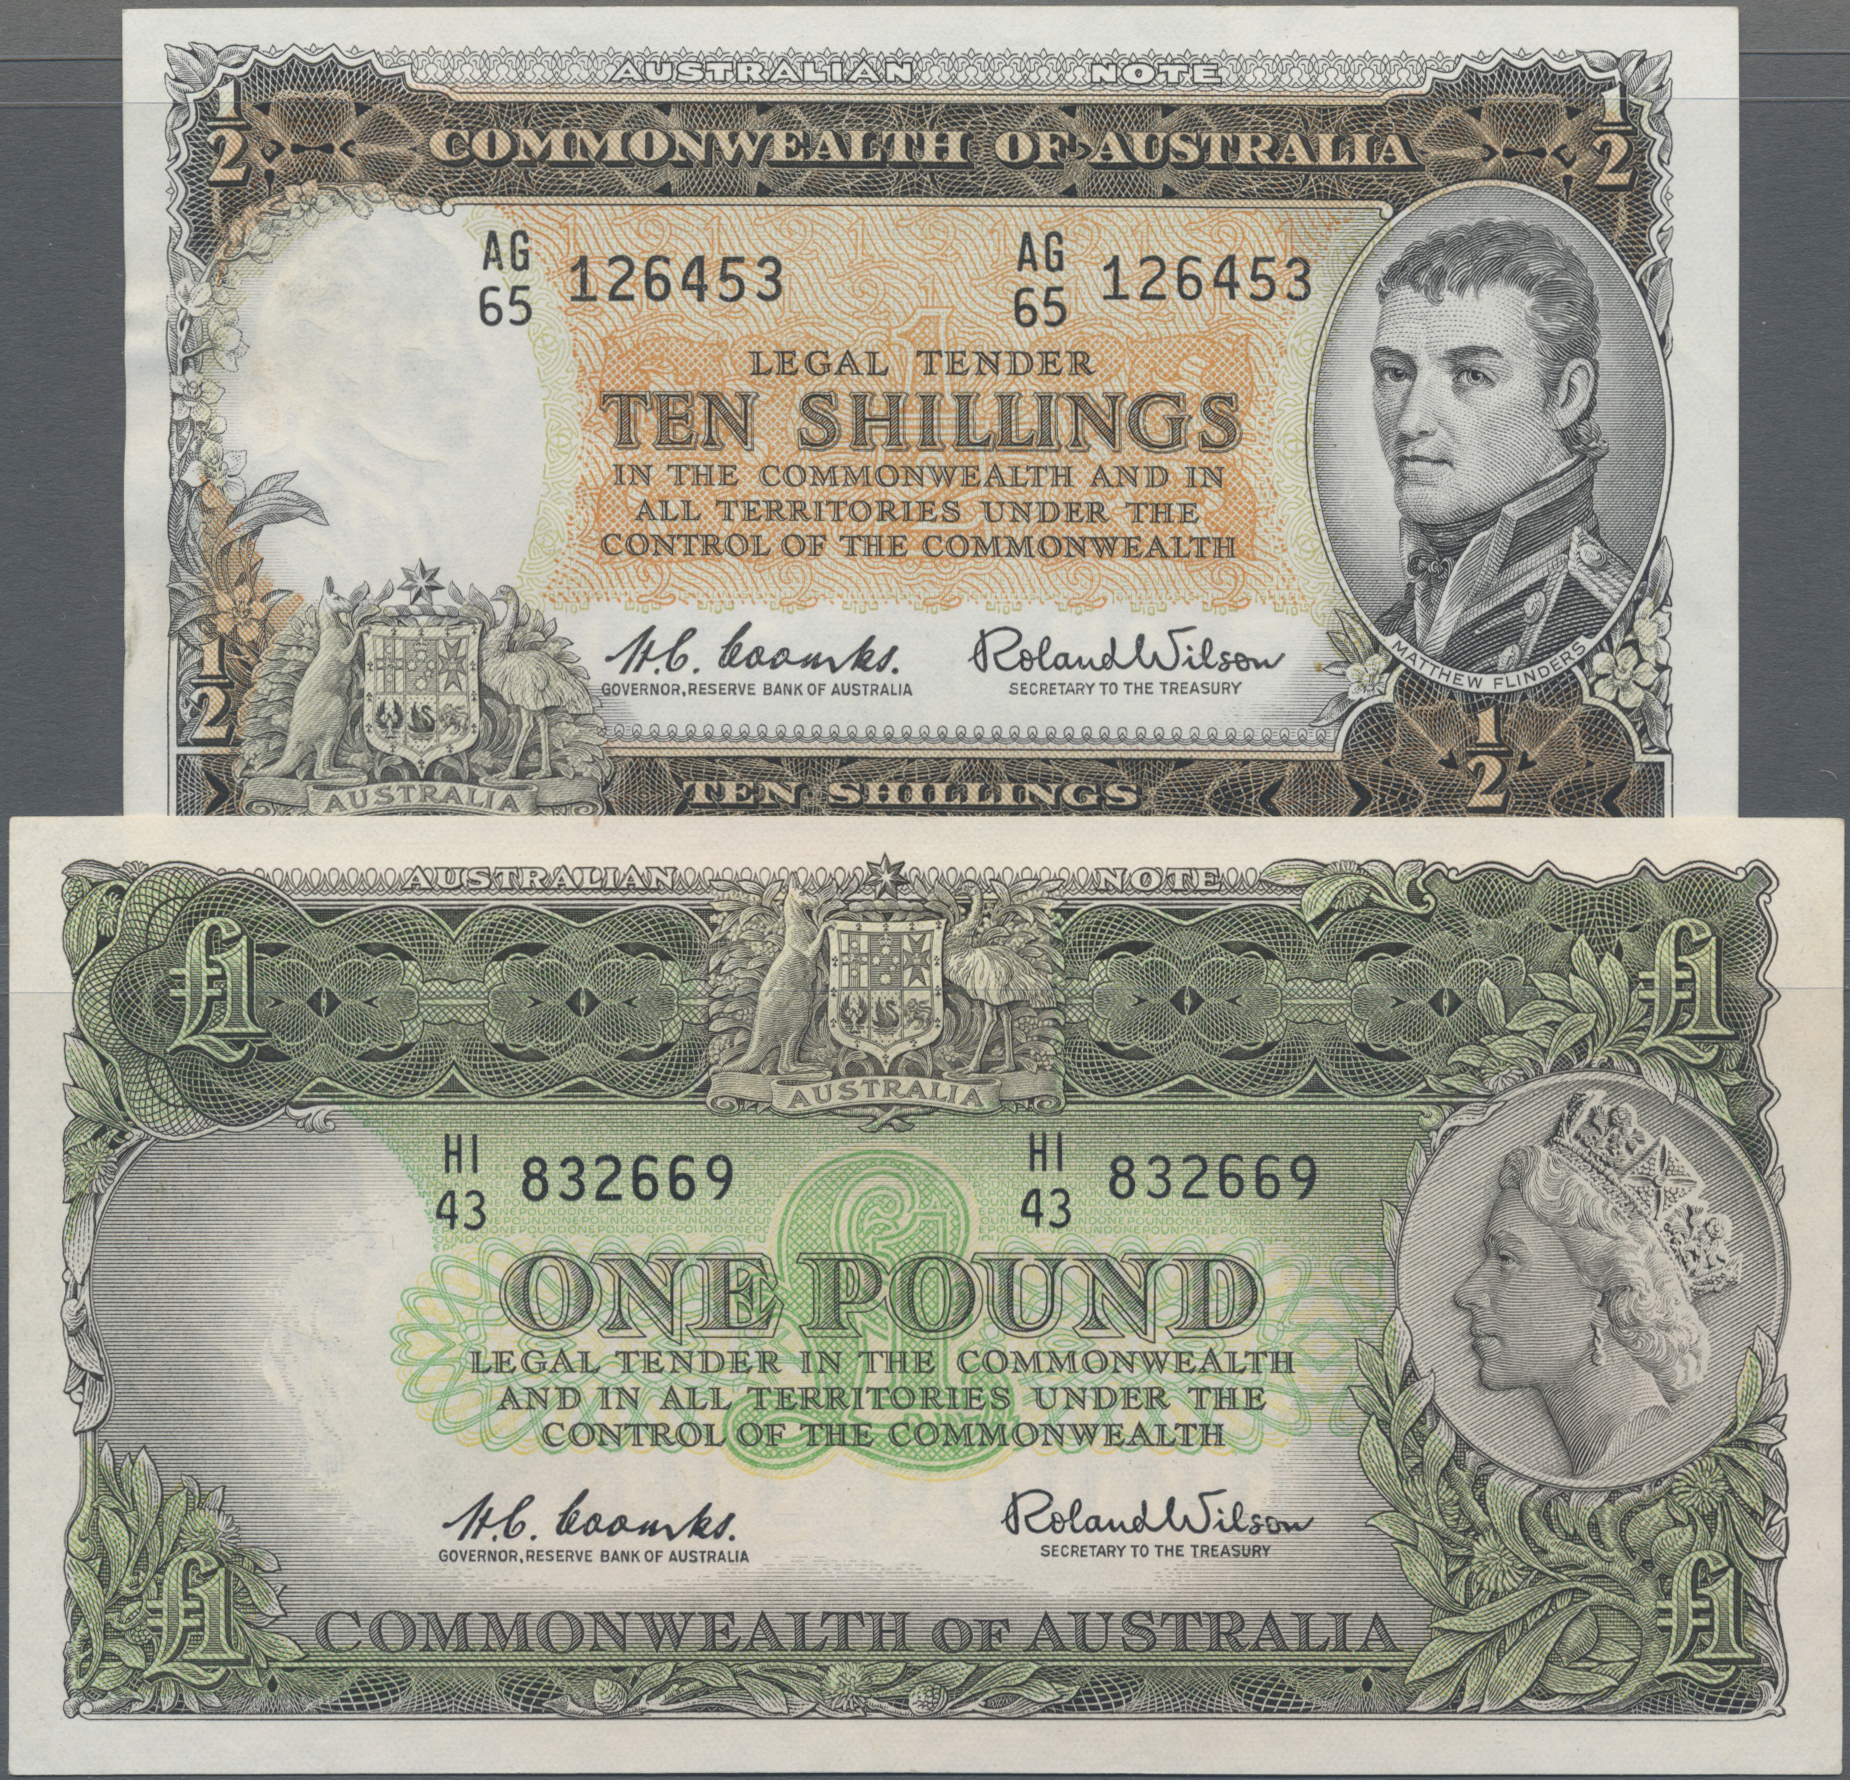 Lot 00006 - Australia / Australien | Banknoten  -  Auktionshaus Christoph Gärtner GmbH & Co. KG 54th AUCTION - Day 1 Coins & Banknotes